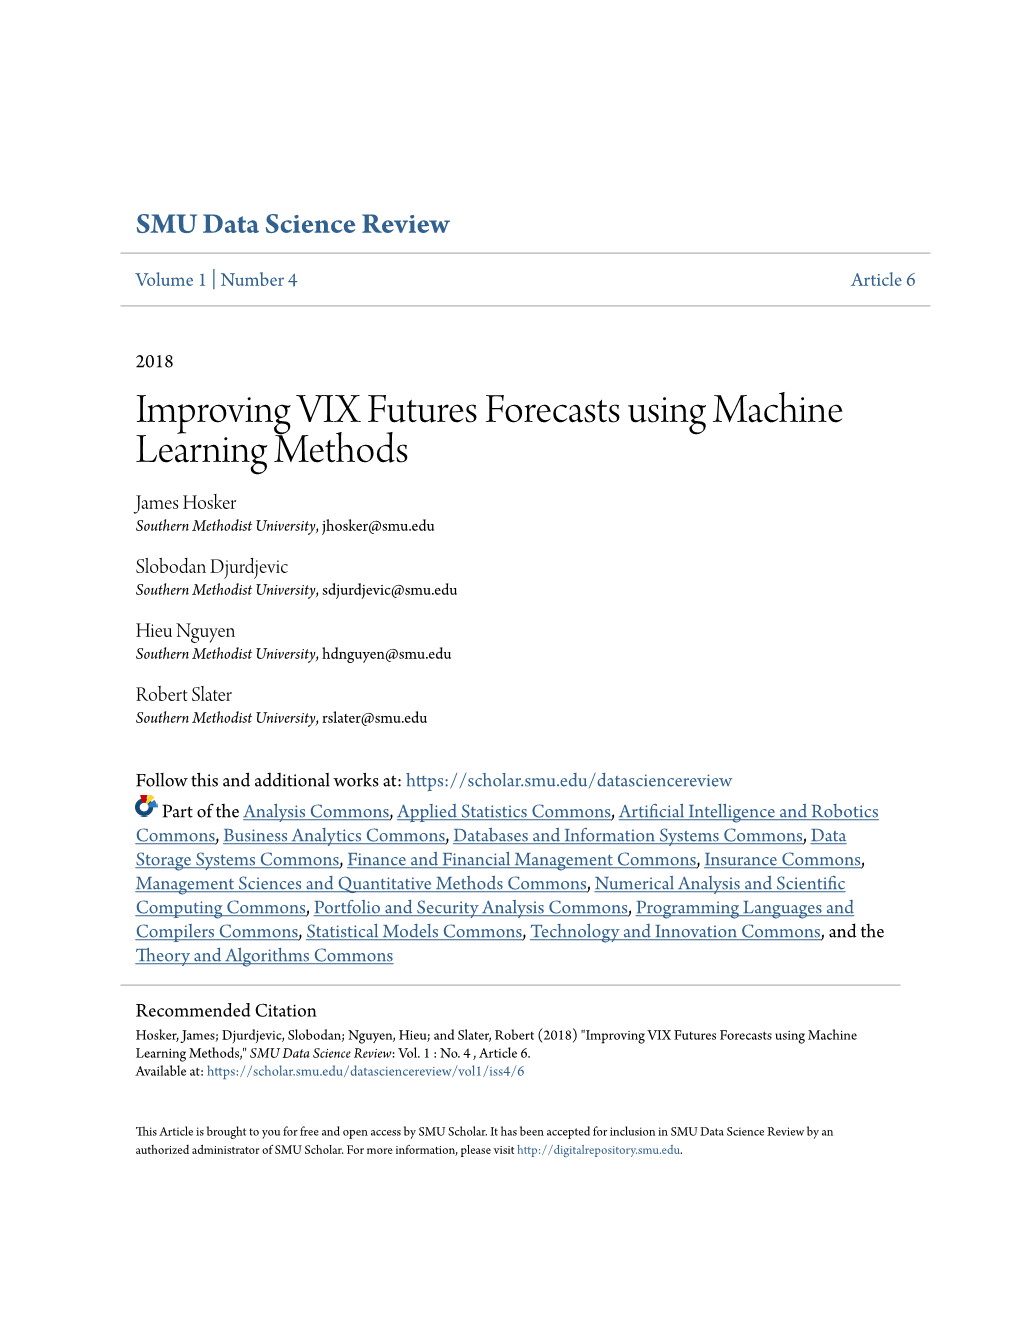 Improving VIX Futures Forecasts Using Machine Learning Methods James Hosker Southern Methodist University, Jhosker@Smu.Edu